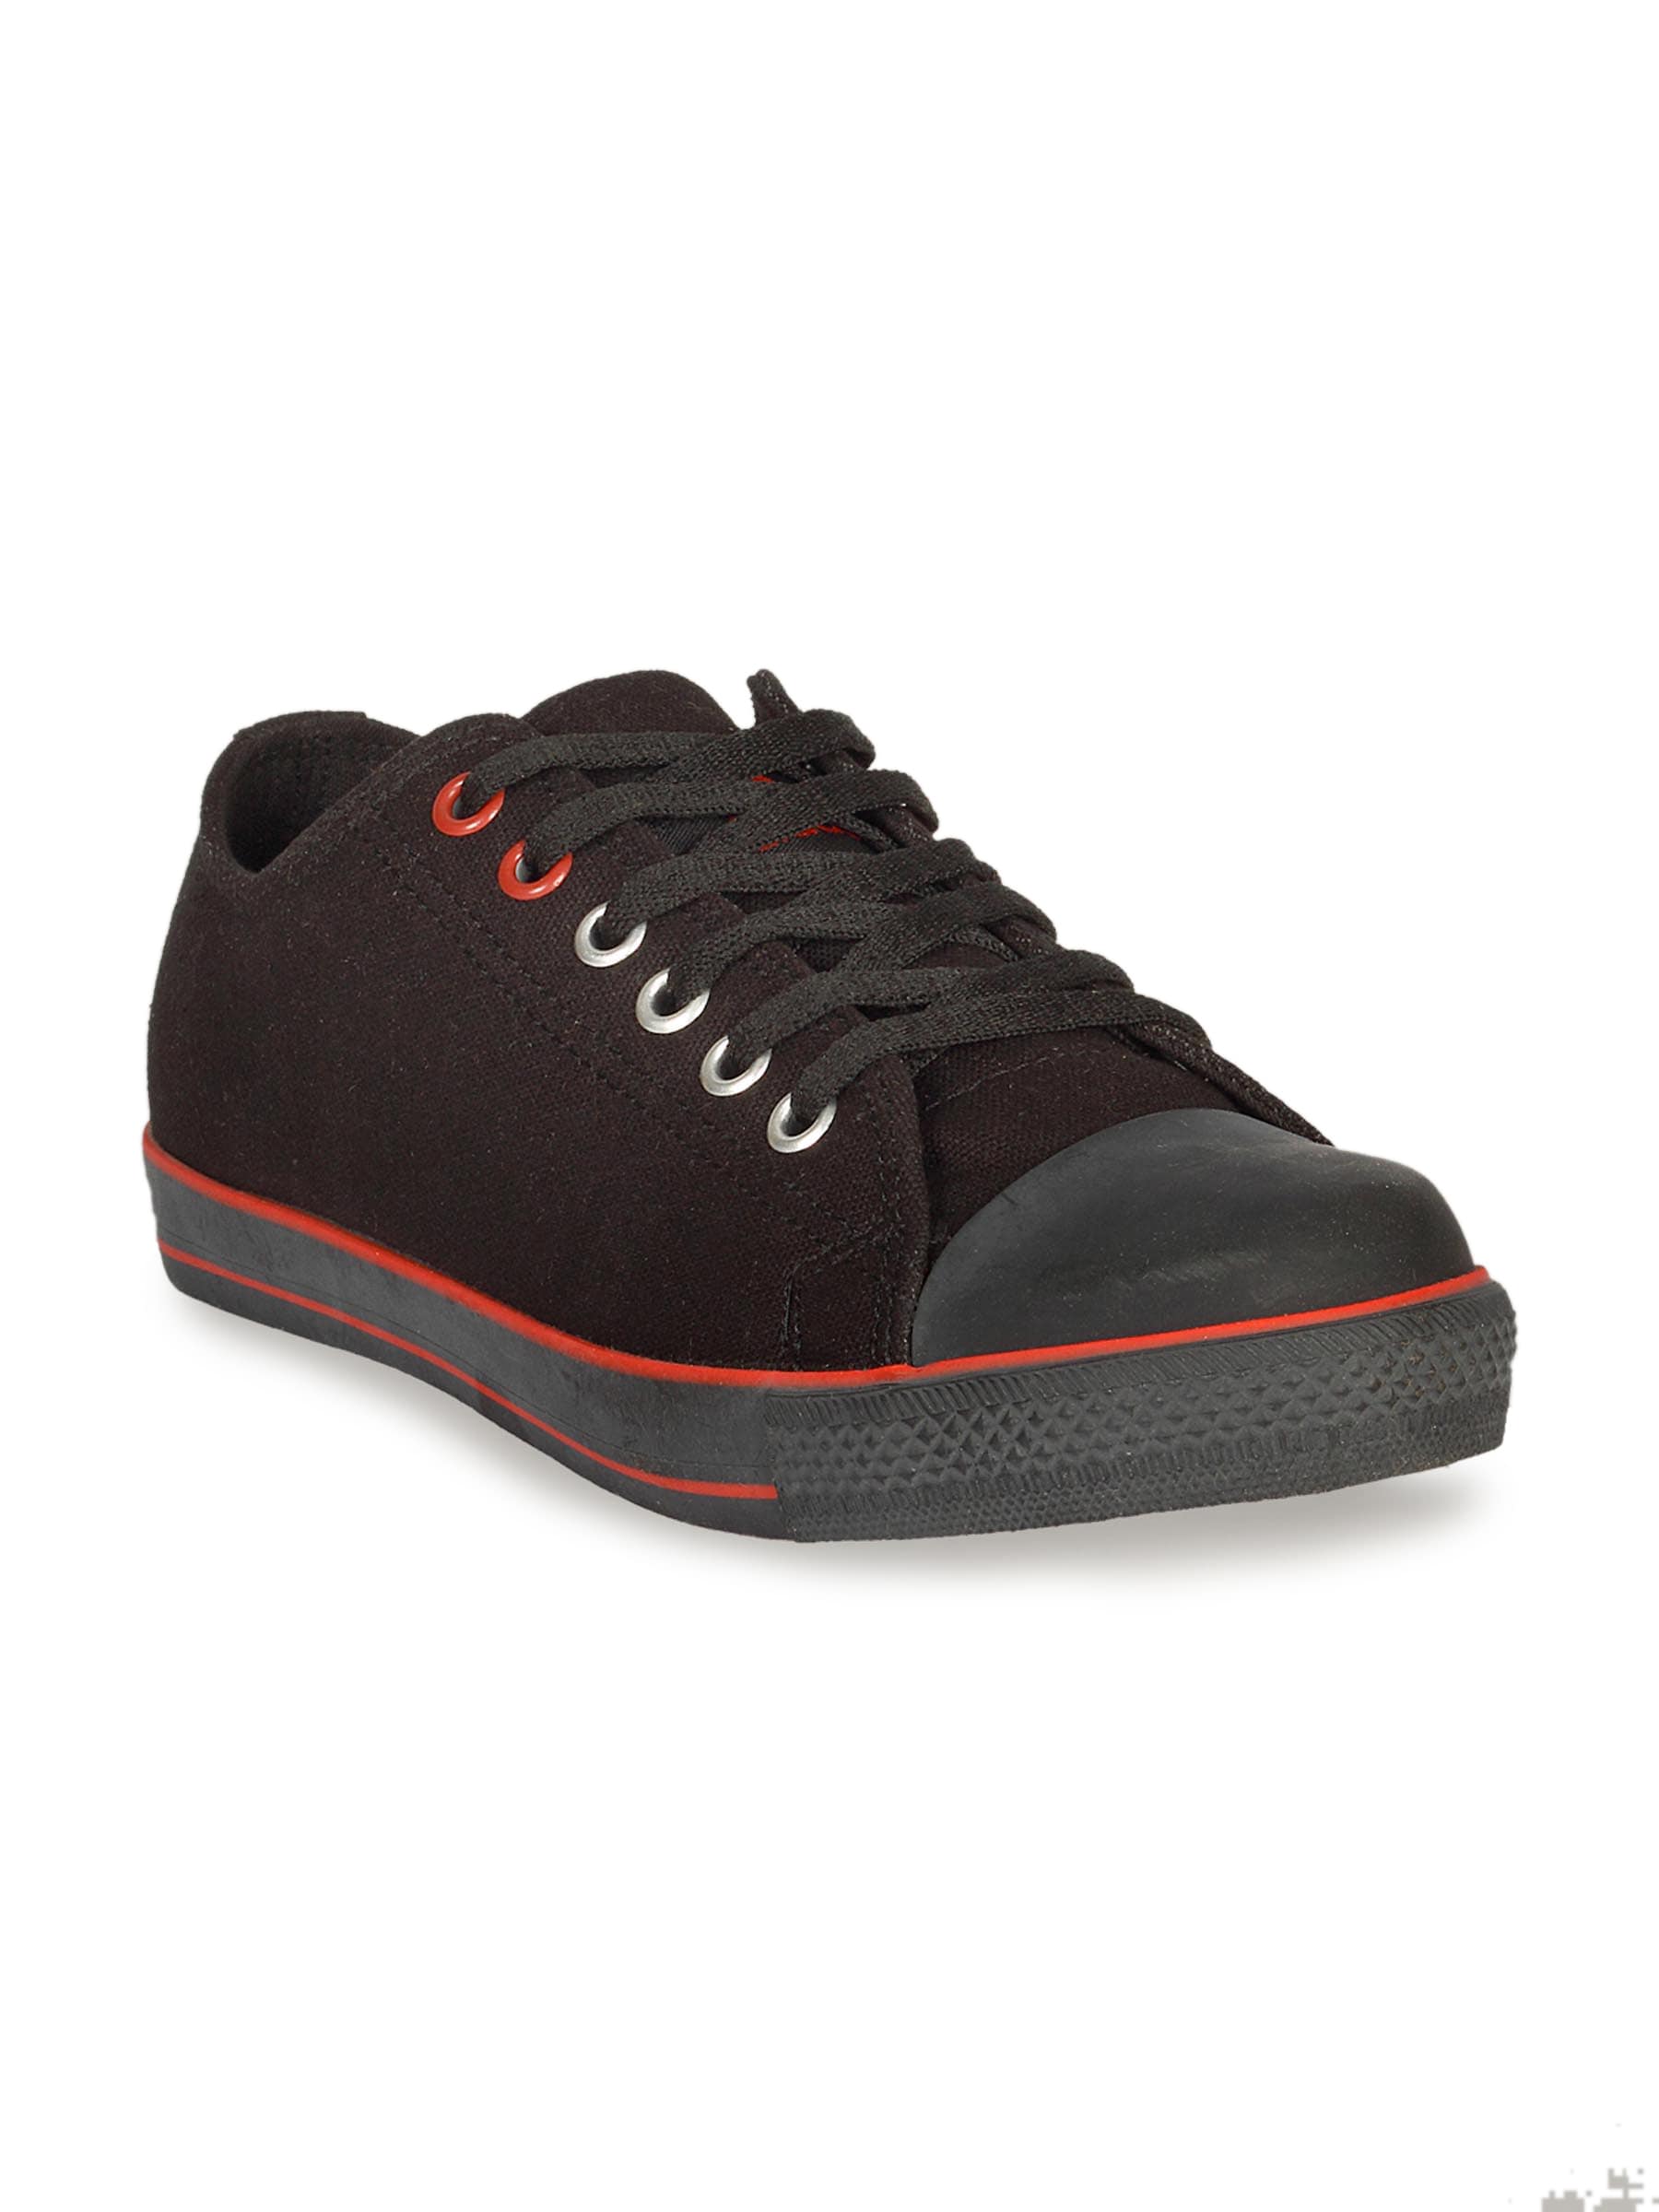 ADIDAS Unisex Color Blast Black Red Shoe